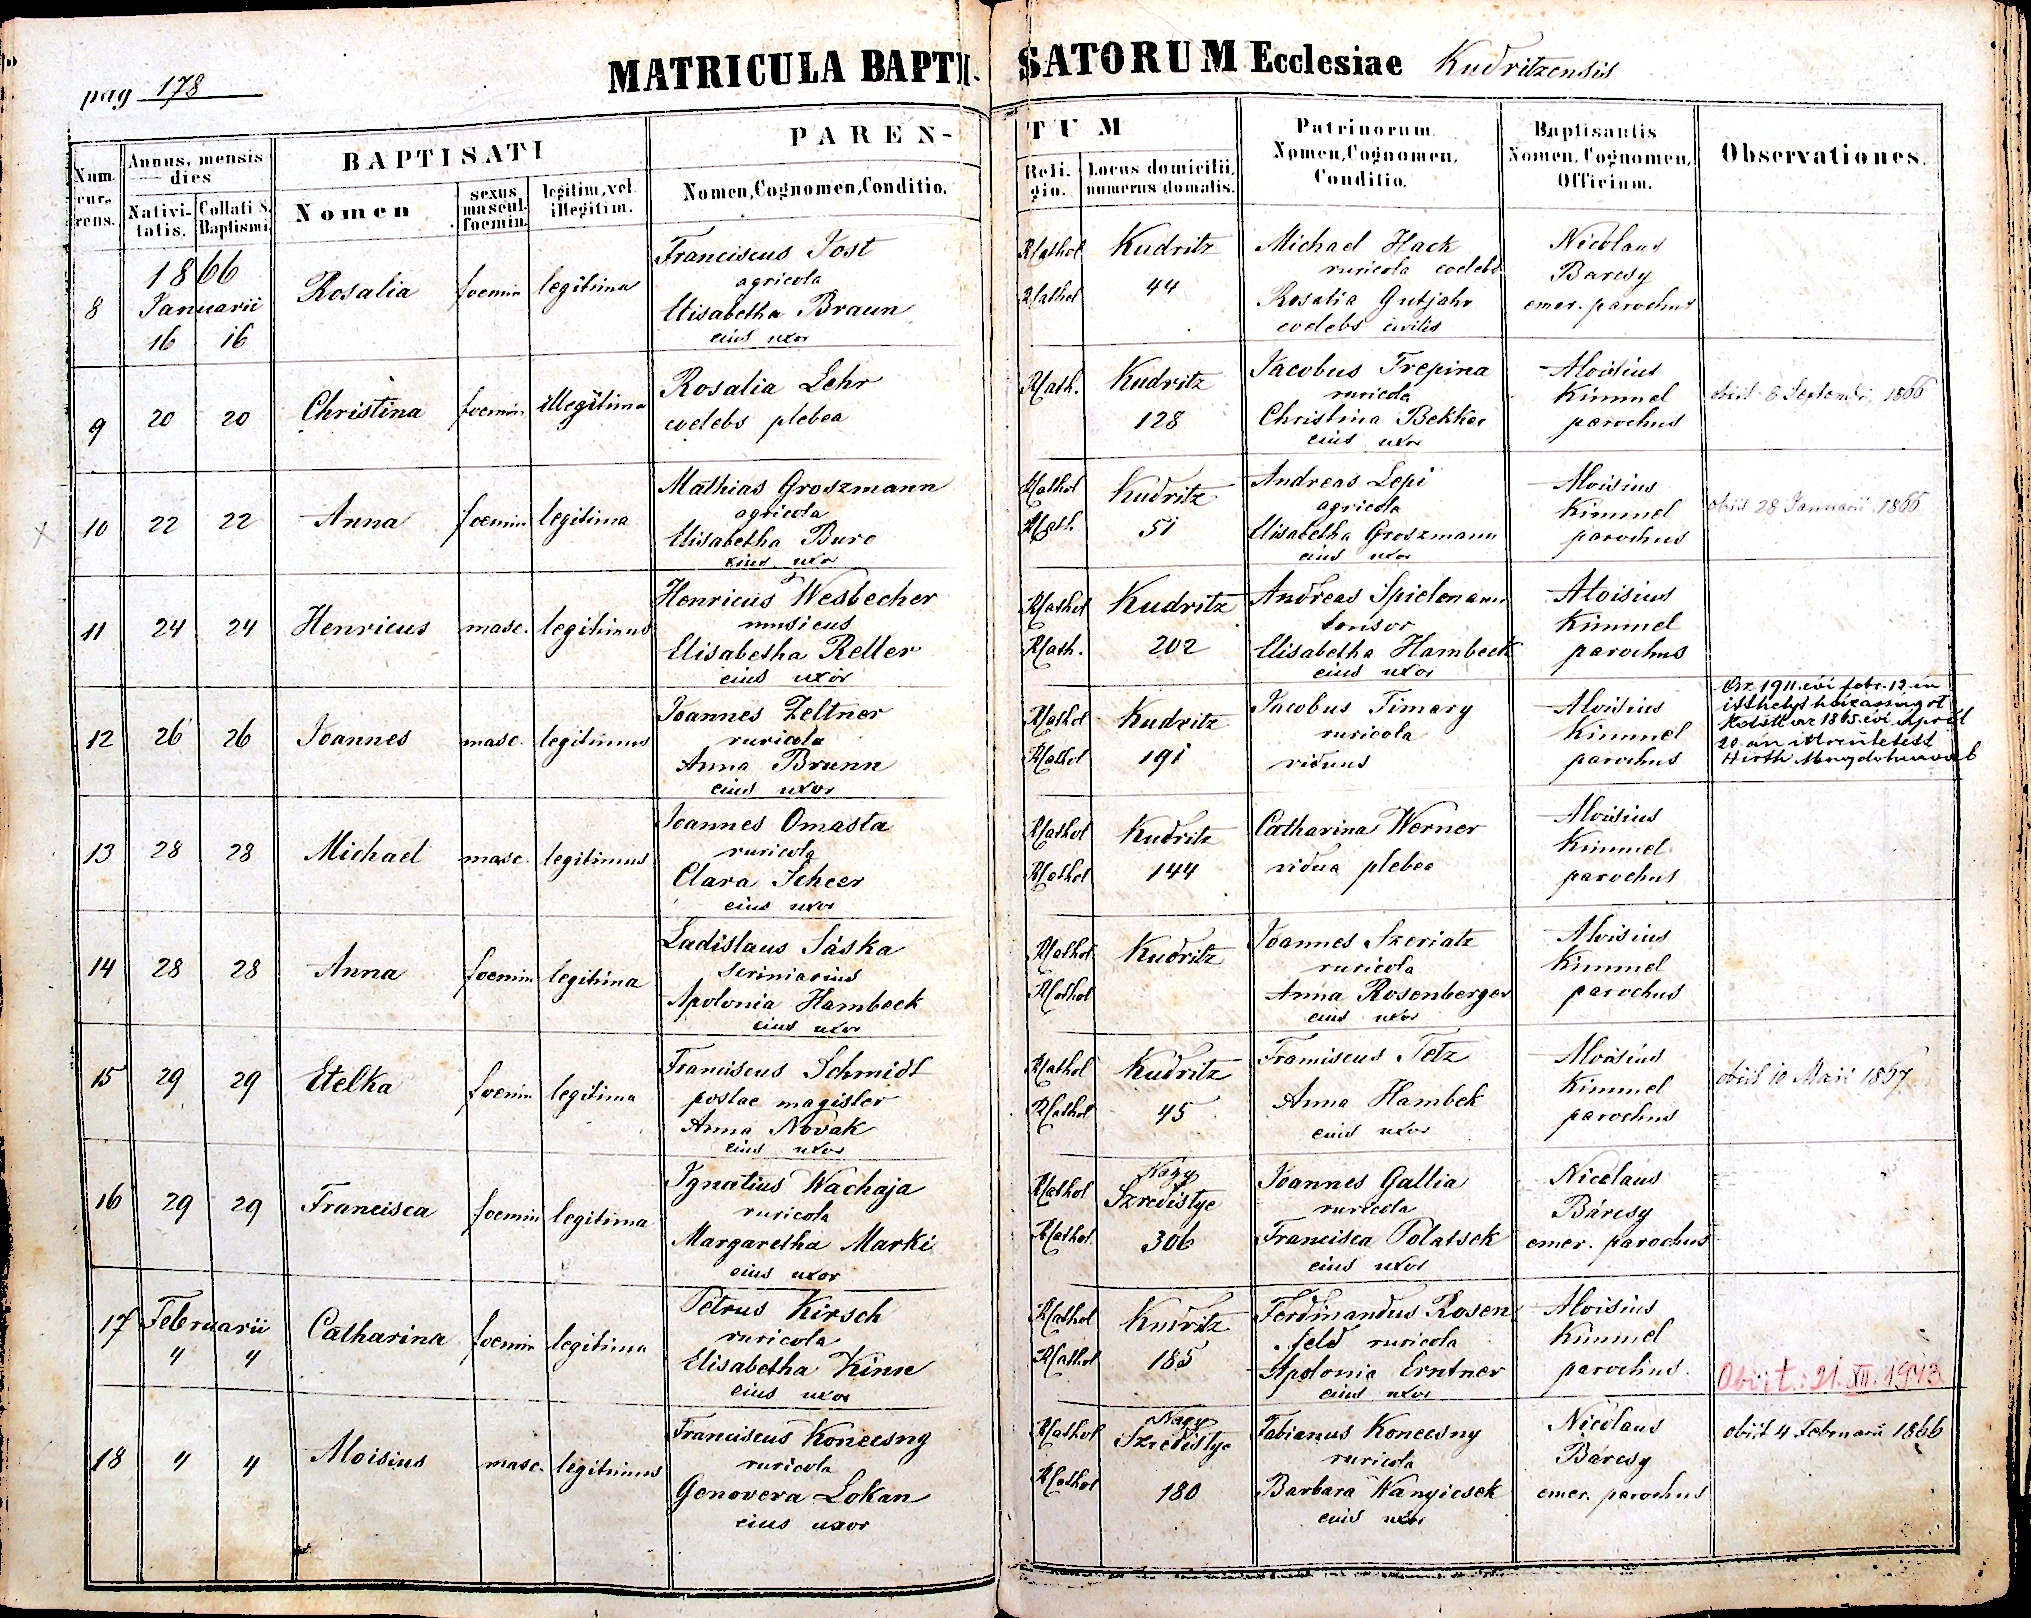 images/church_records/BIRTHS/1852-1870B/178